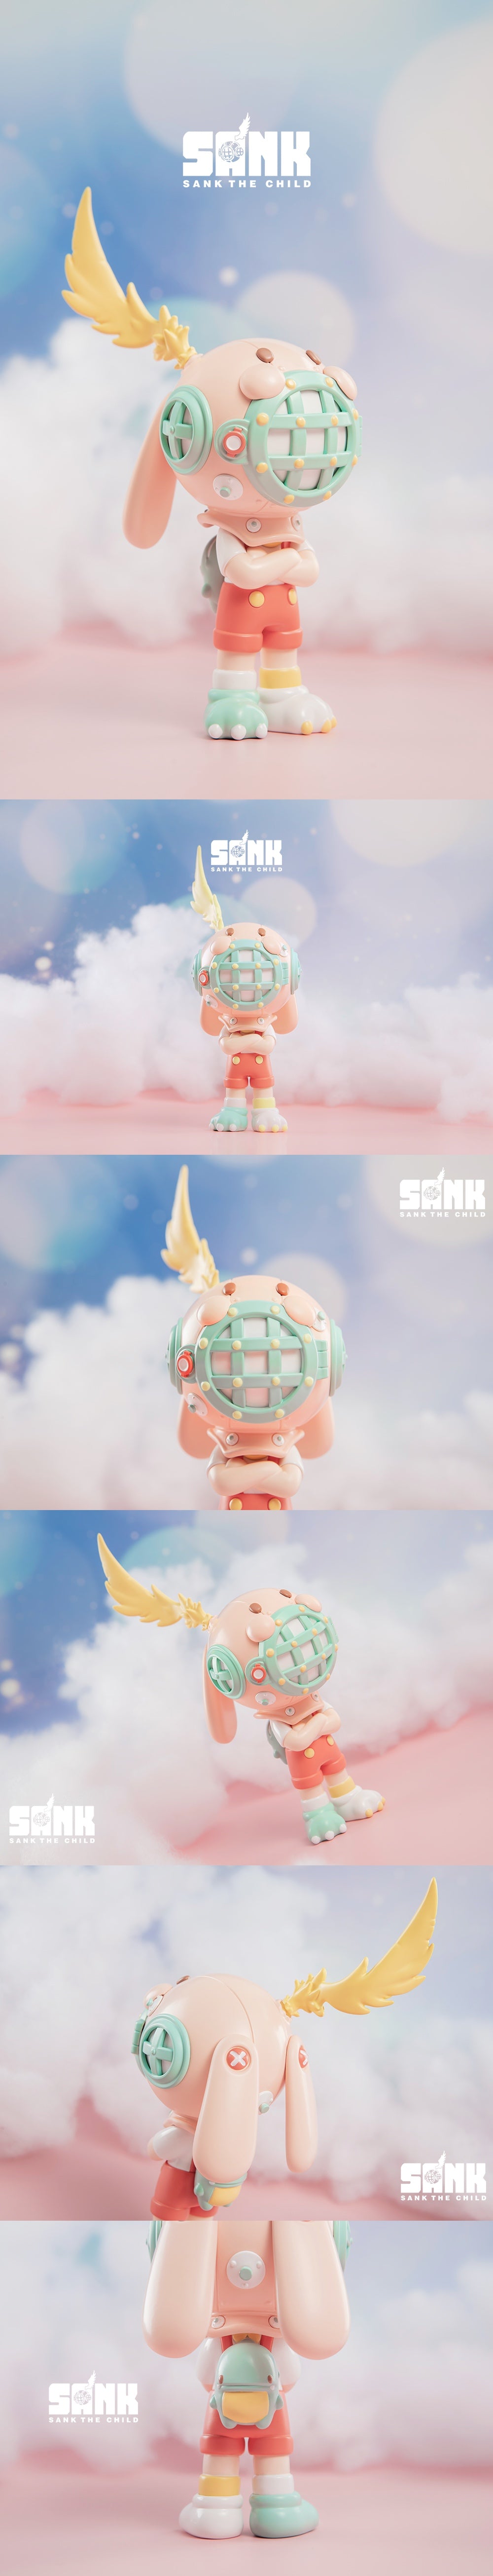 SANK TOYS Sank Toys X Pang Ngaew Little Sank Little Ngaew Collectible Figurine